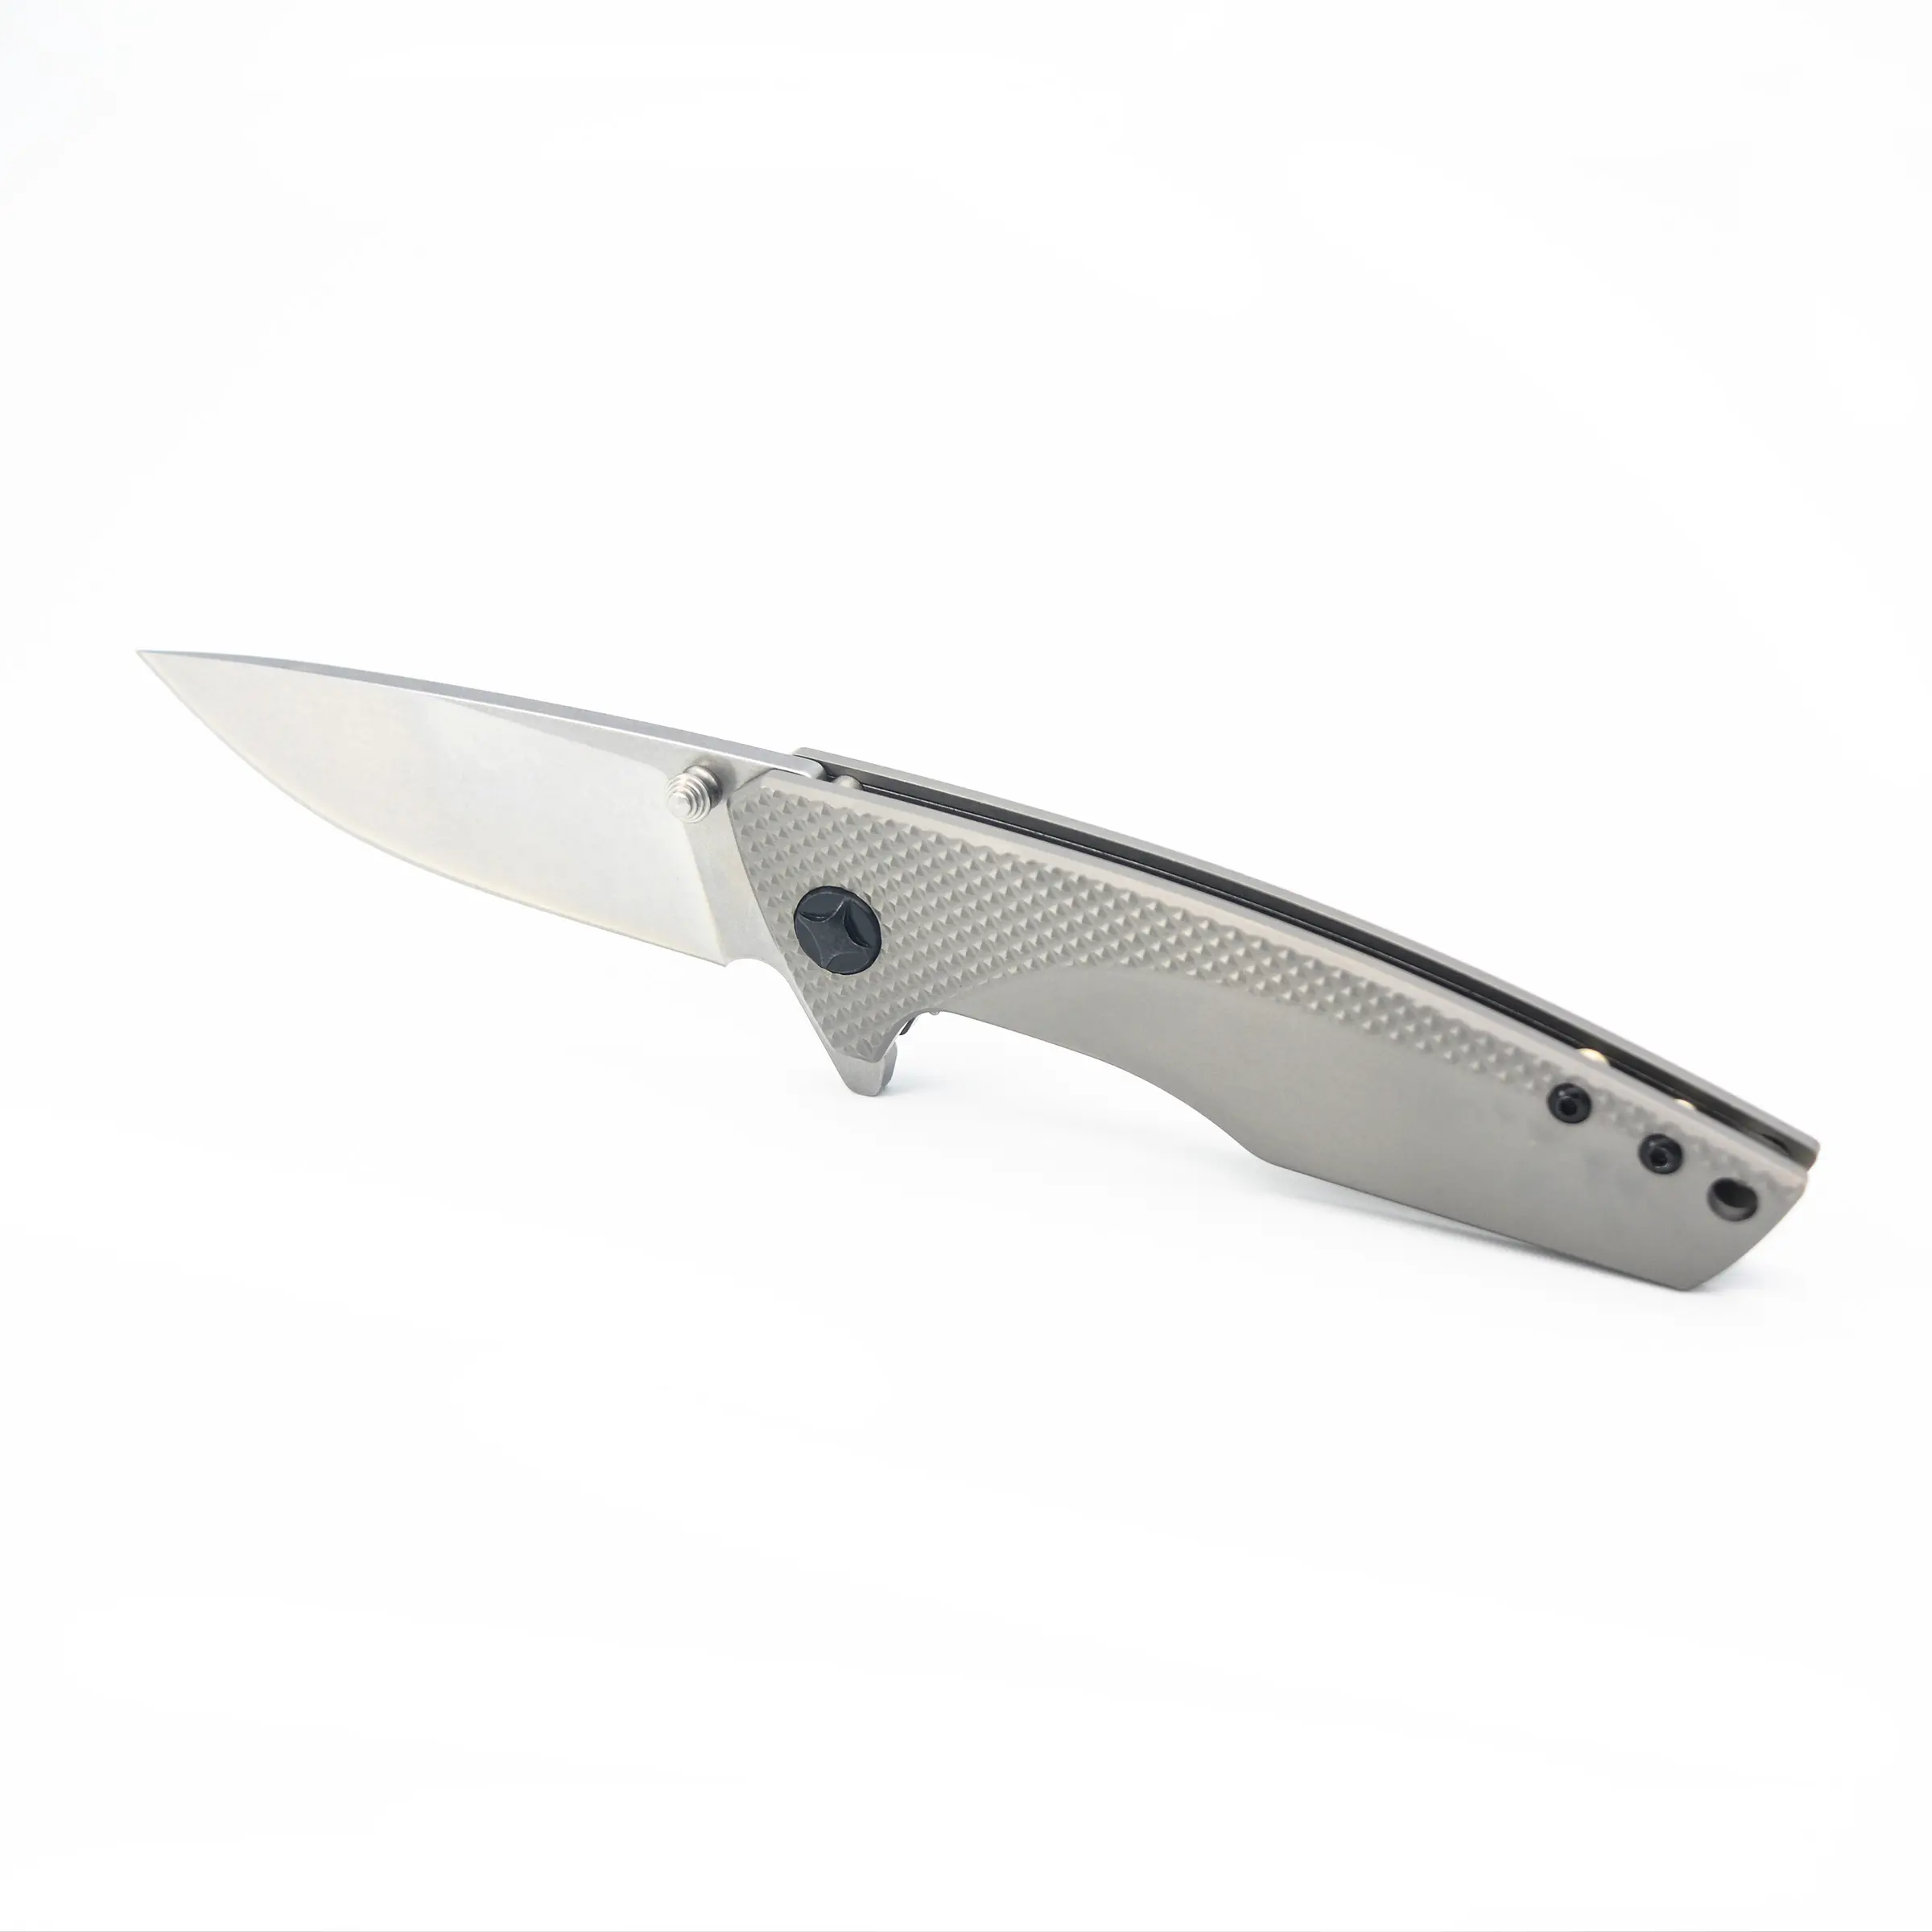 OEM High-end G10 Handle Folding Pocket Knife Survival EDC knife with Titanium Handle